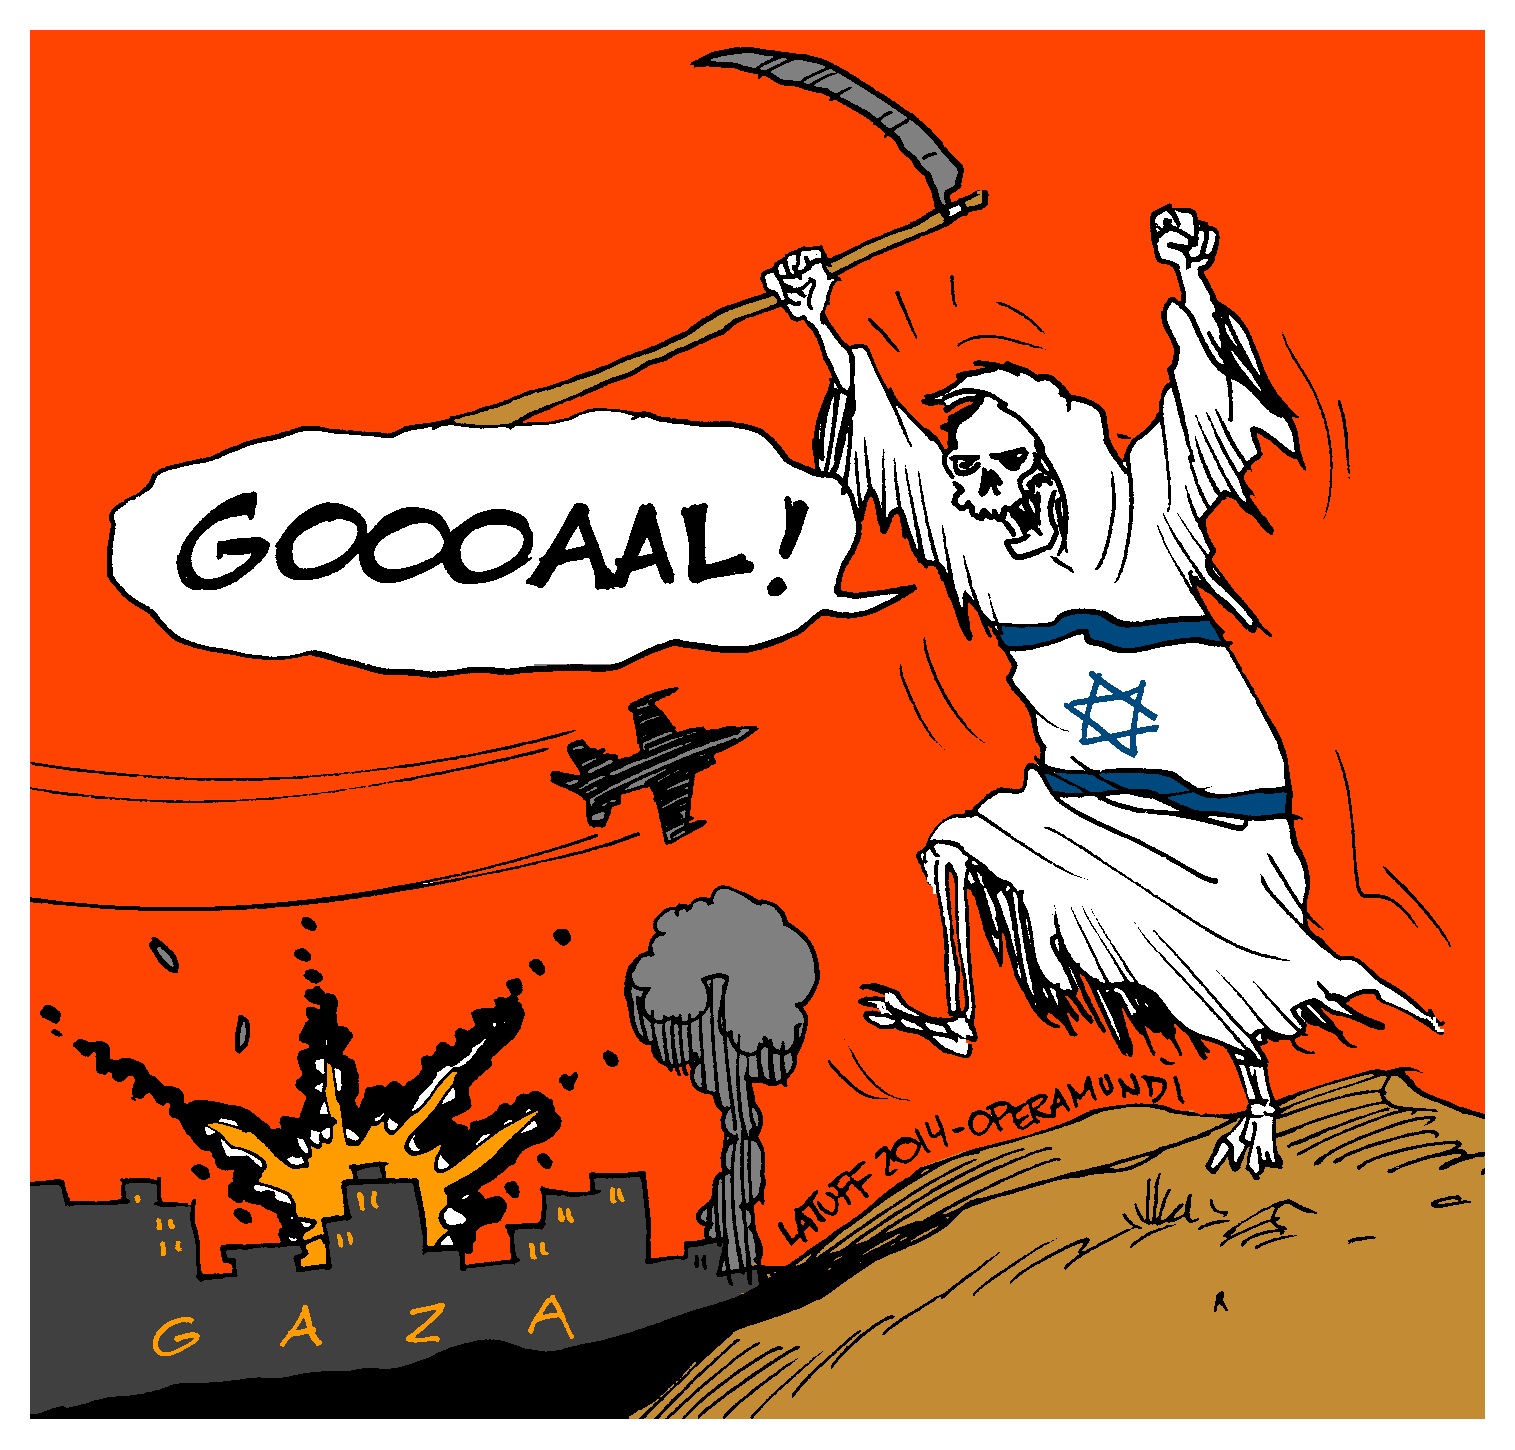 Latuff_football_gazajpg.jpg